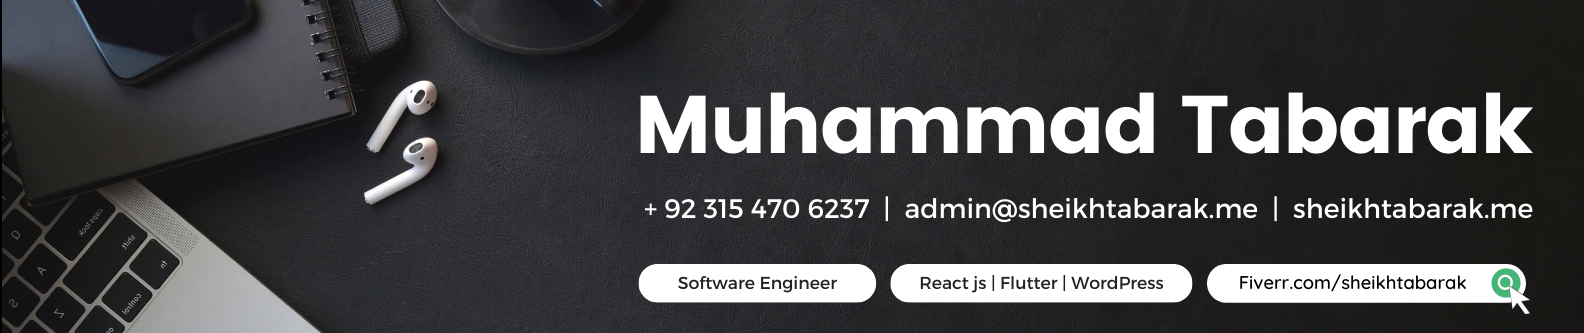 Muhammad Tabarak profil başlığı